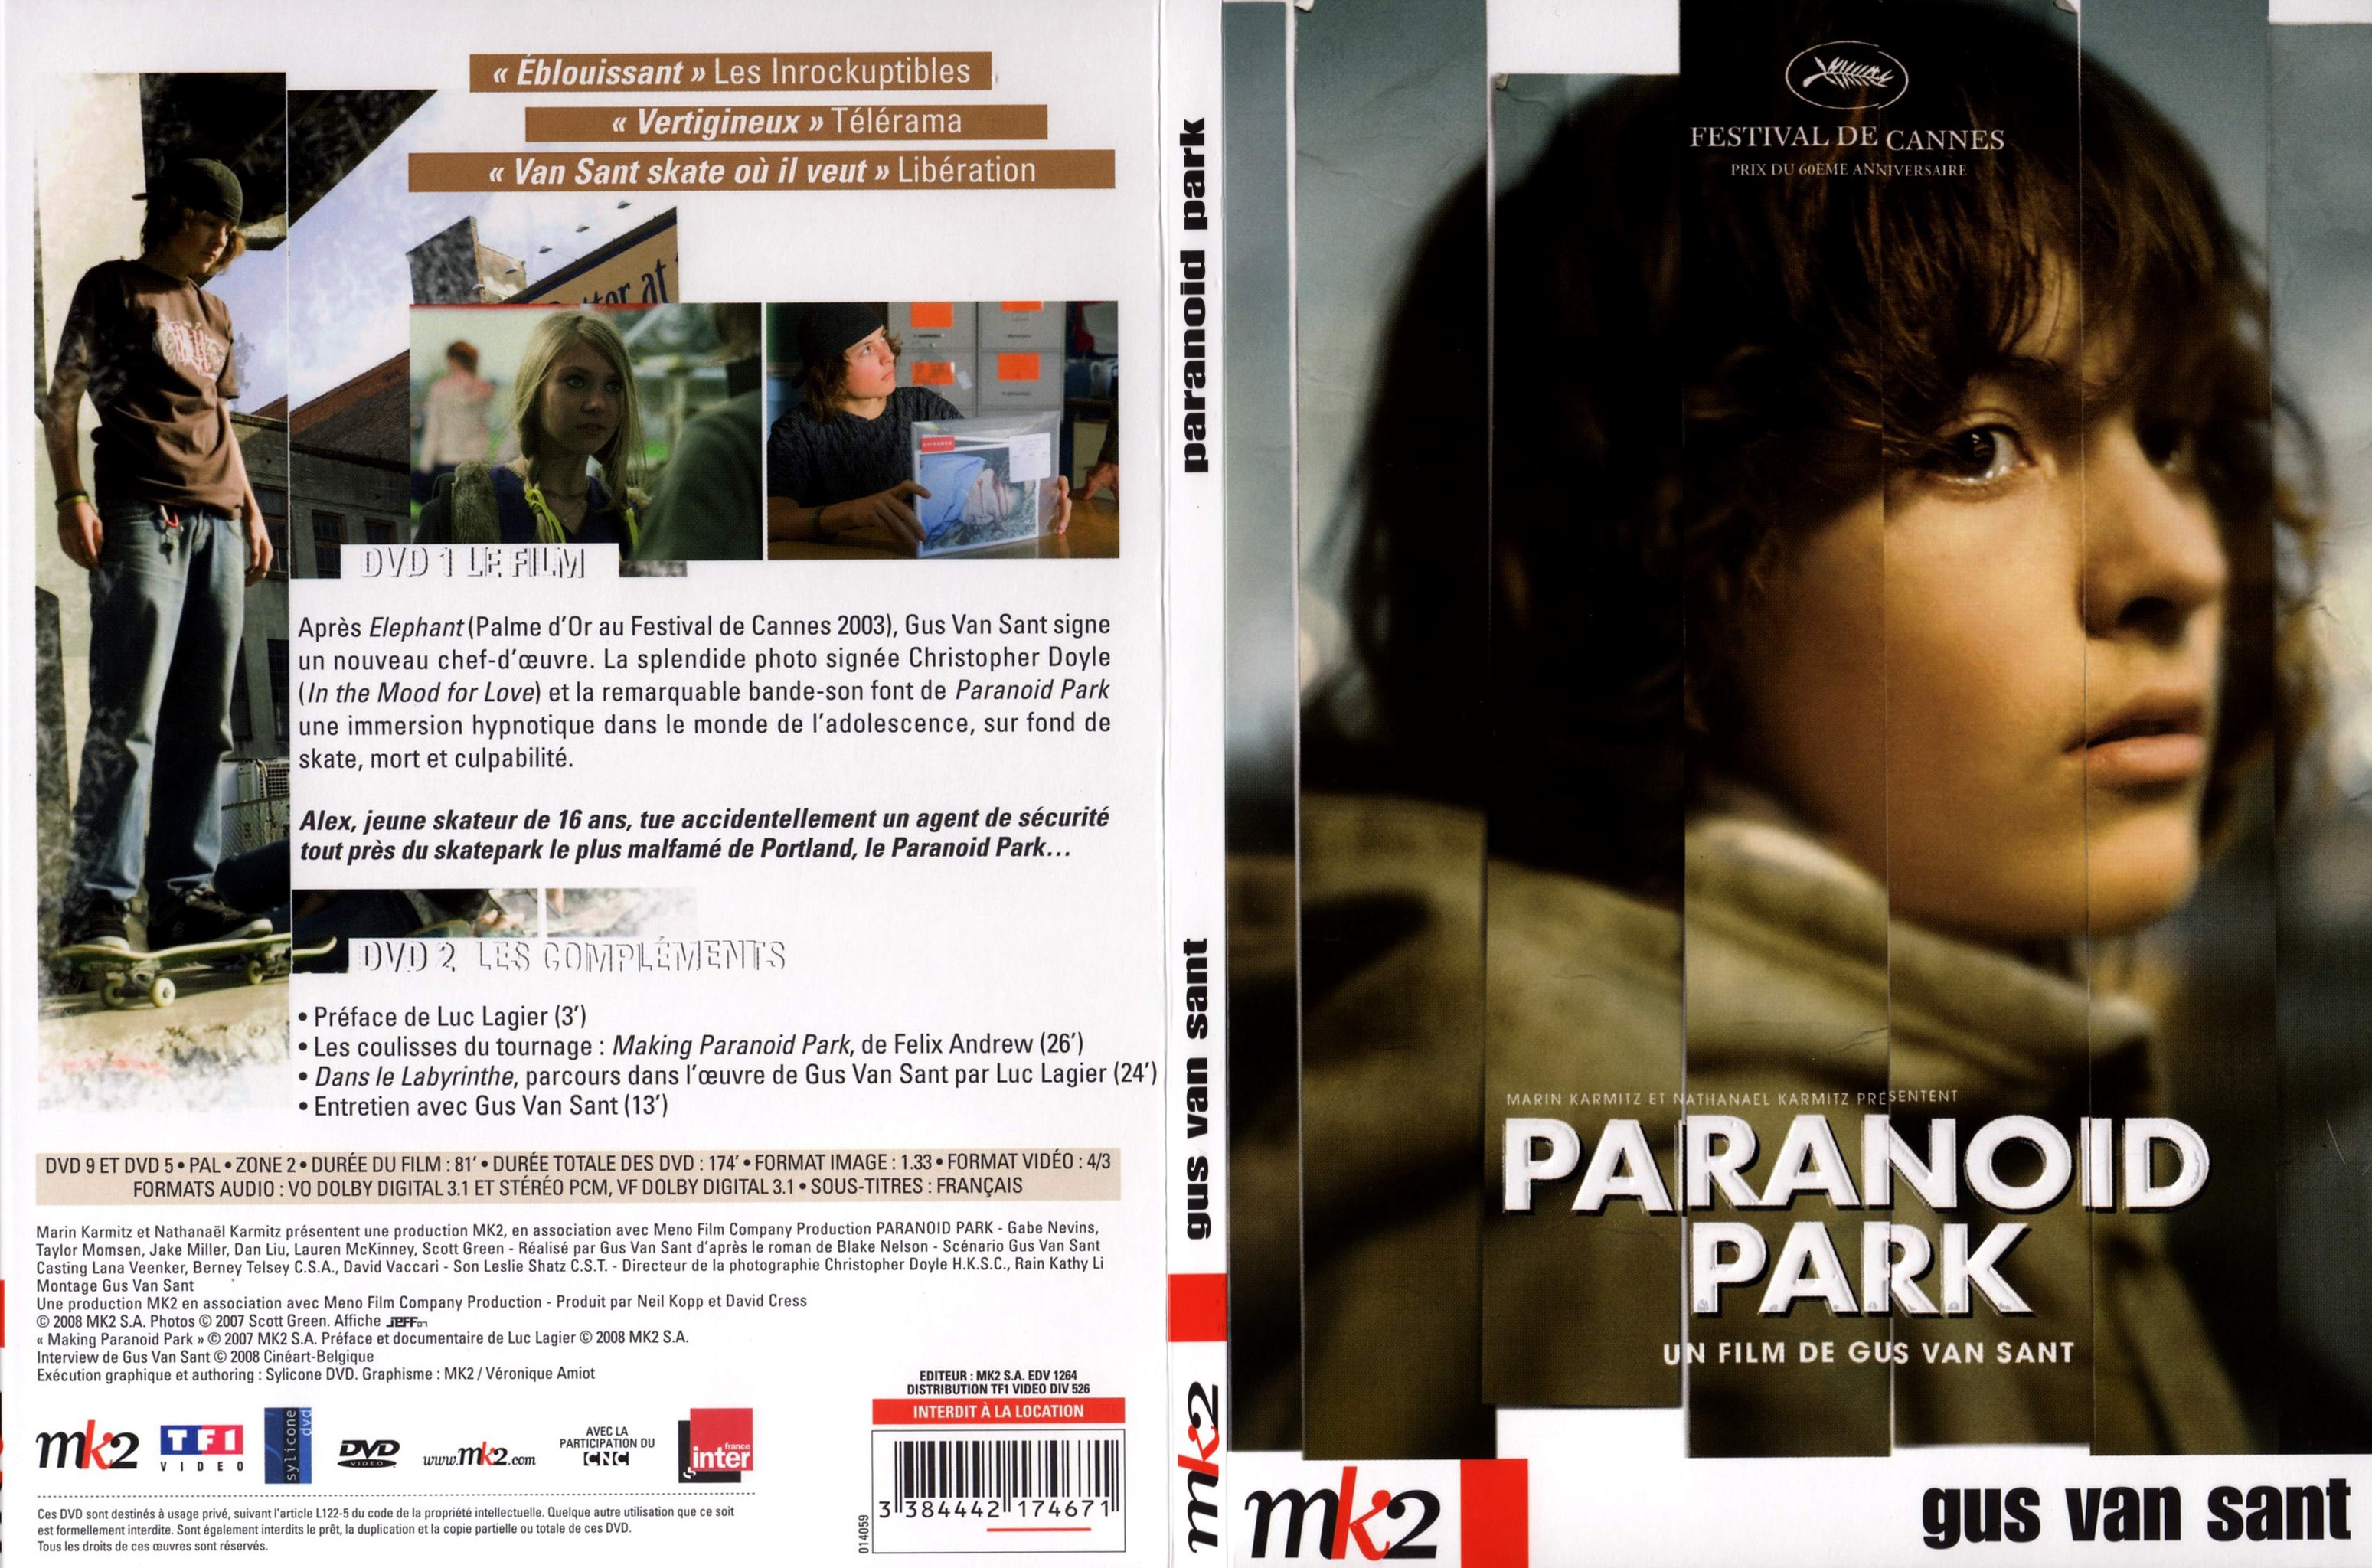 Jaquette DVD Paranoid park - SLIM v2 